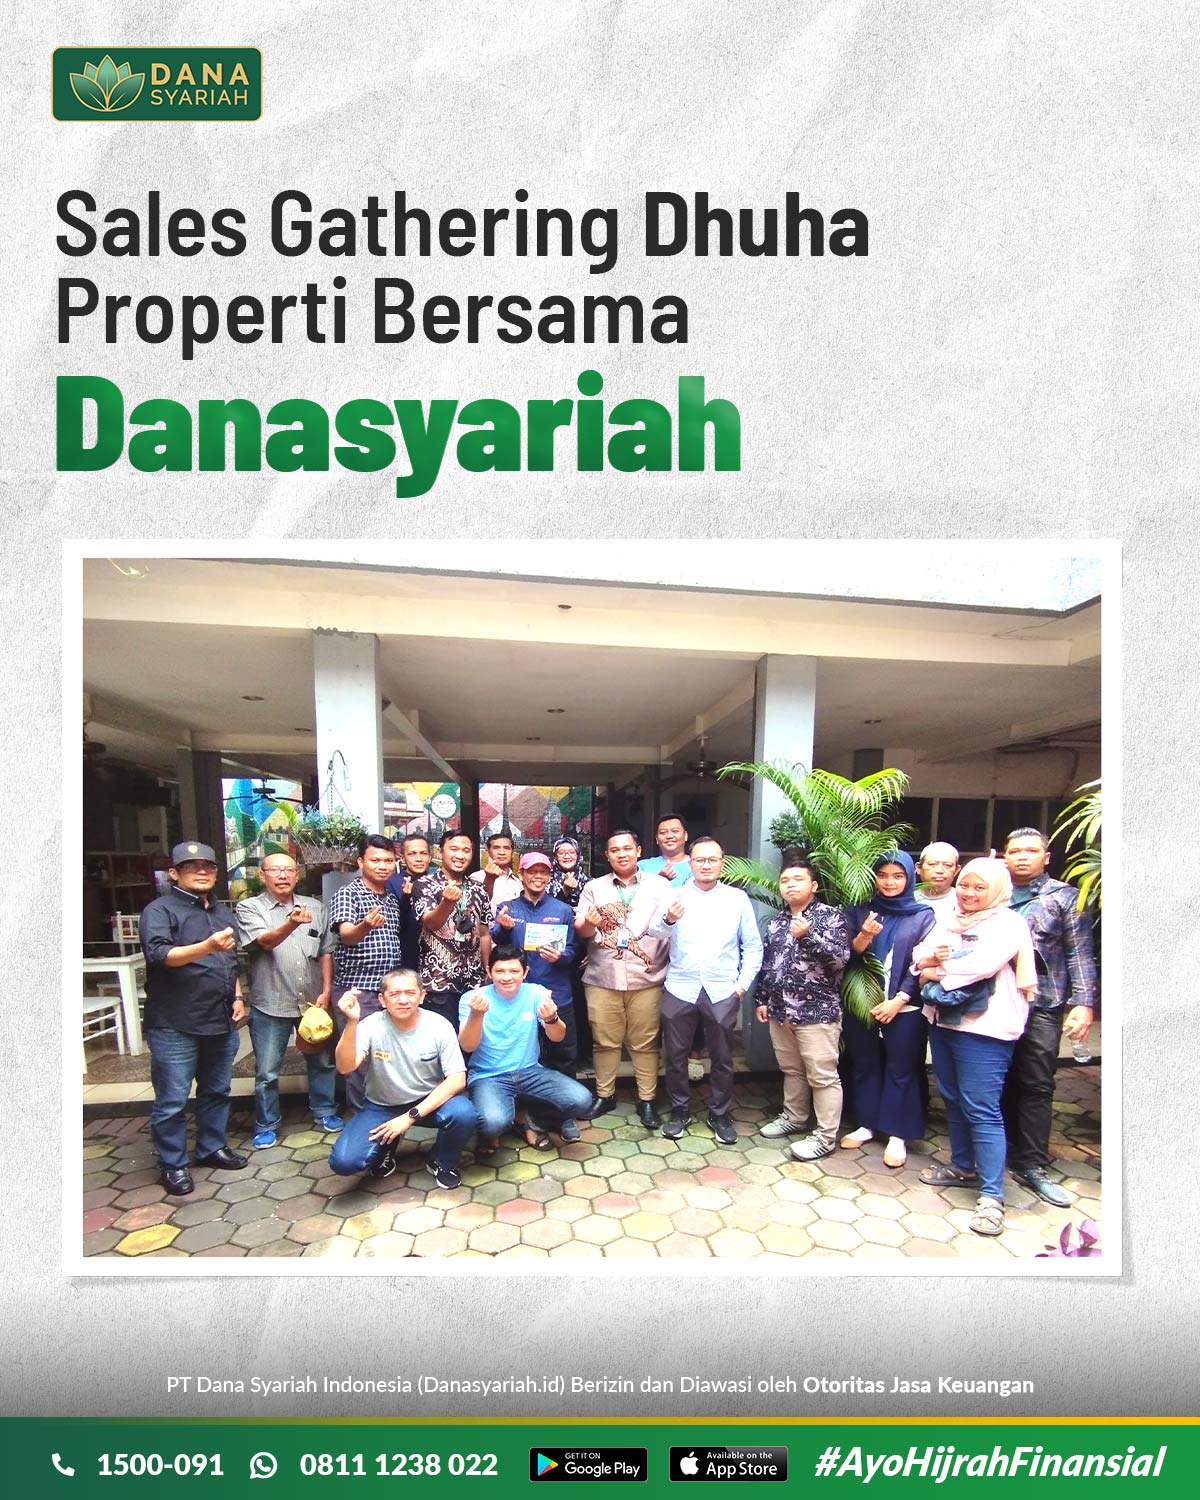 Dana Syariah Sales Gathering Dhuha Properti bersama Danasyariah